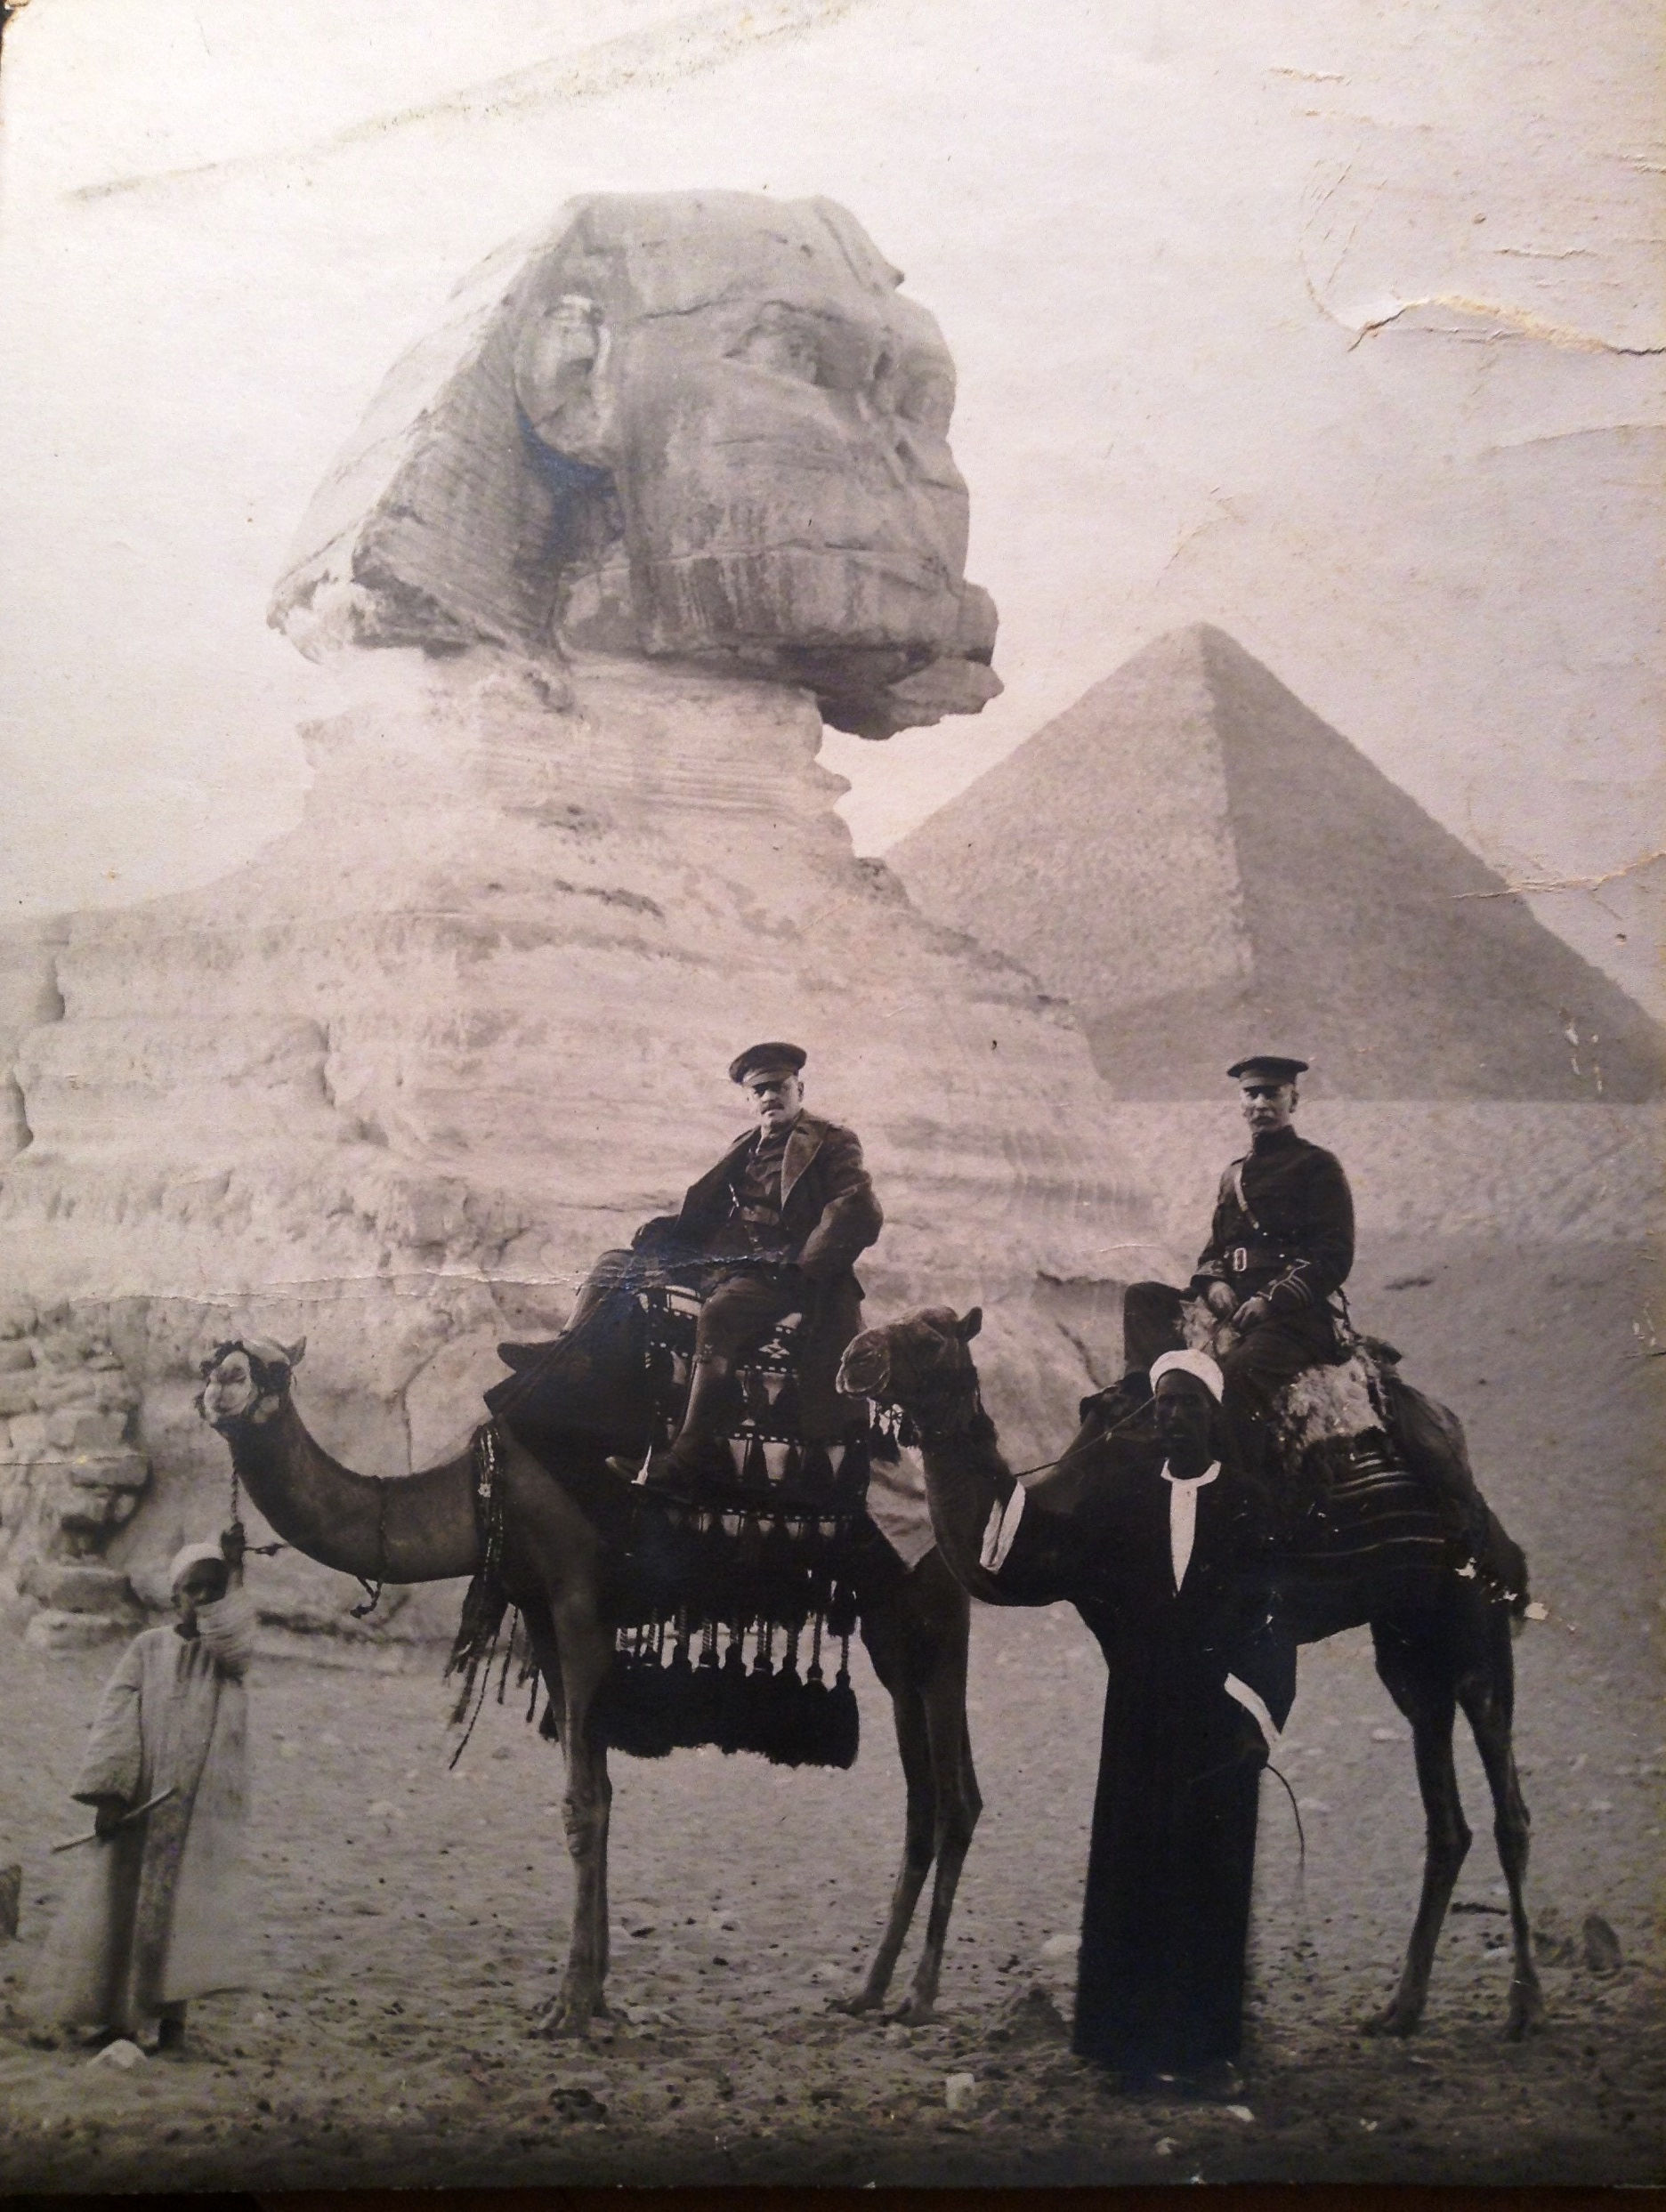 Cairo, Egypt - Dec 7, 1915 - Lt Col Anglin